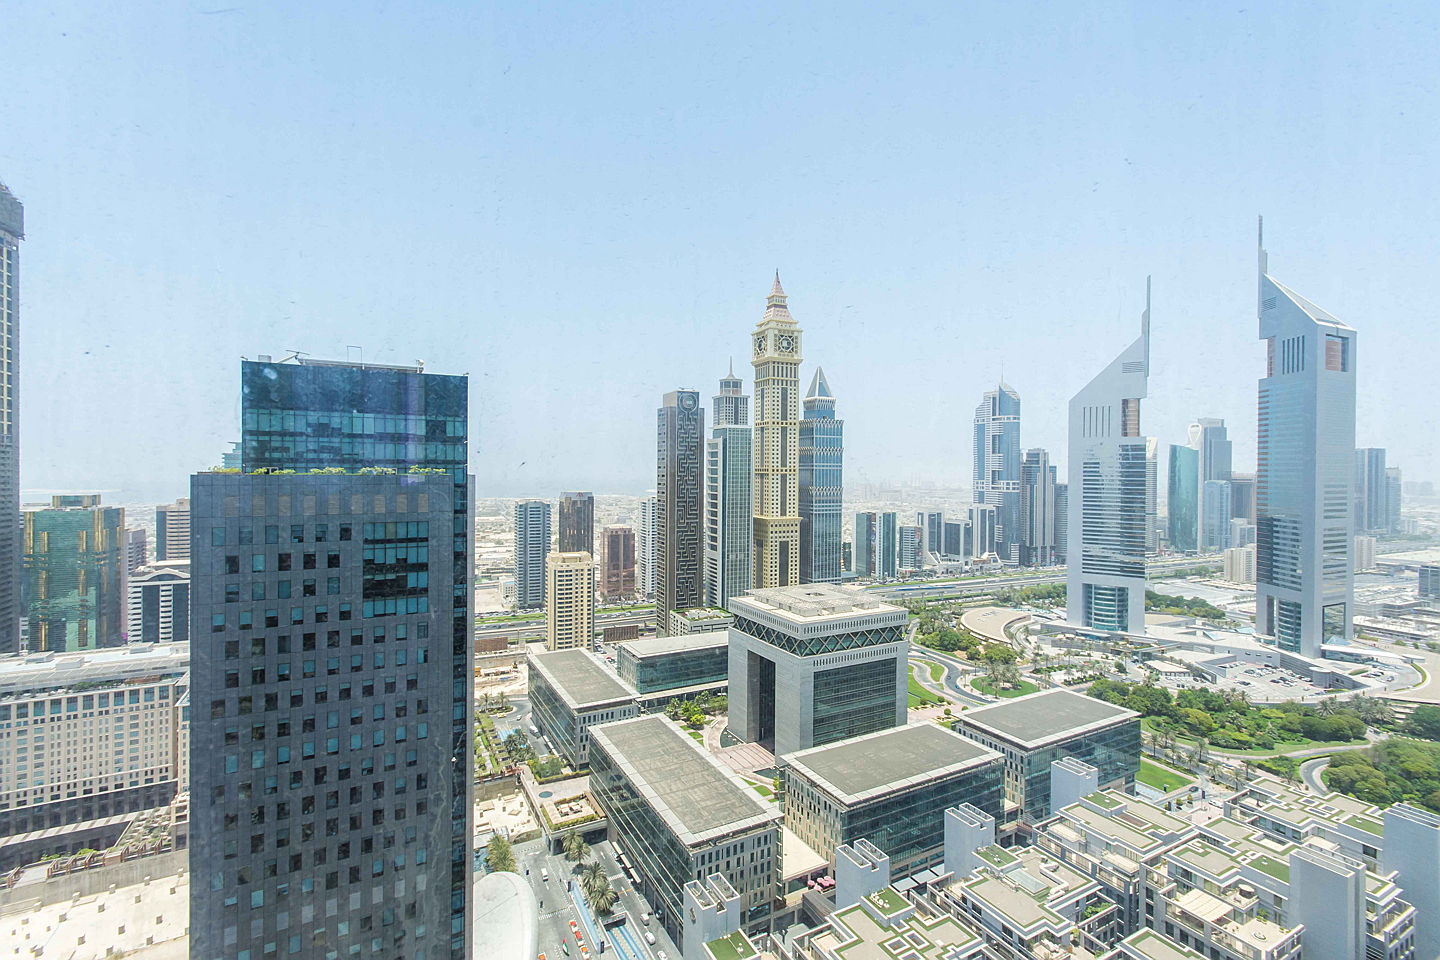  Dubai, United Arab Emirates
- DSC_2562.jpg